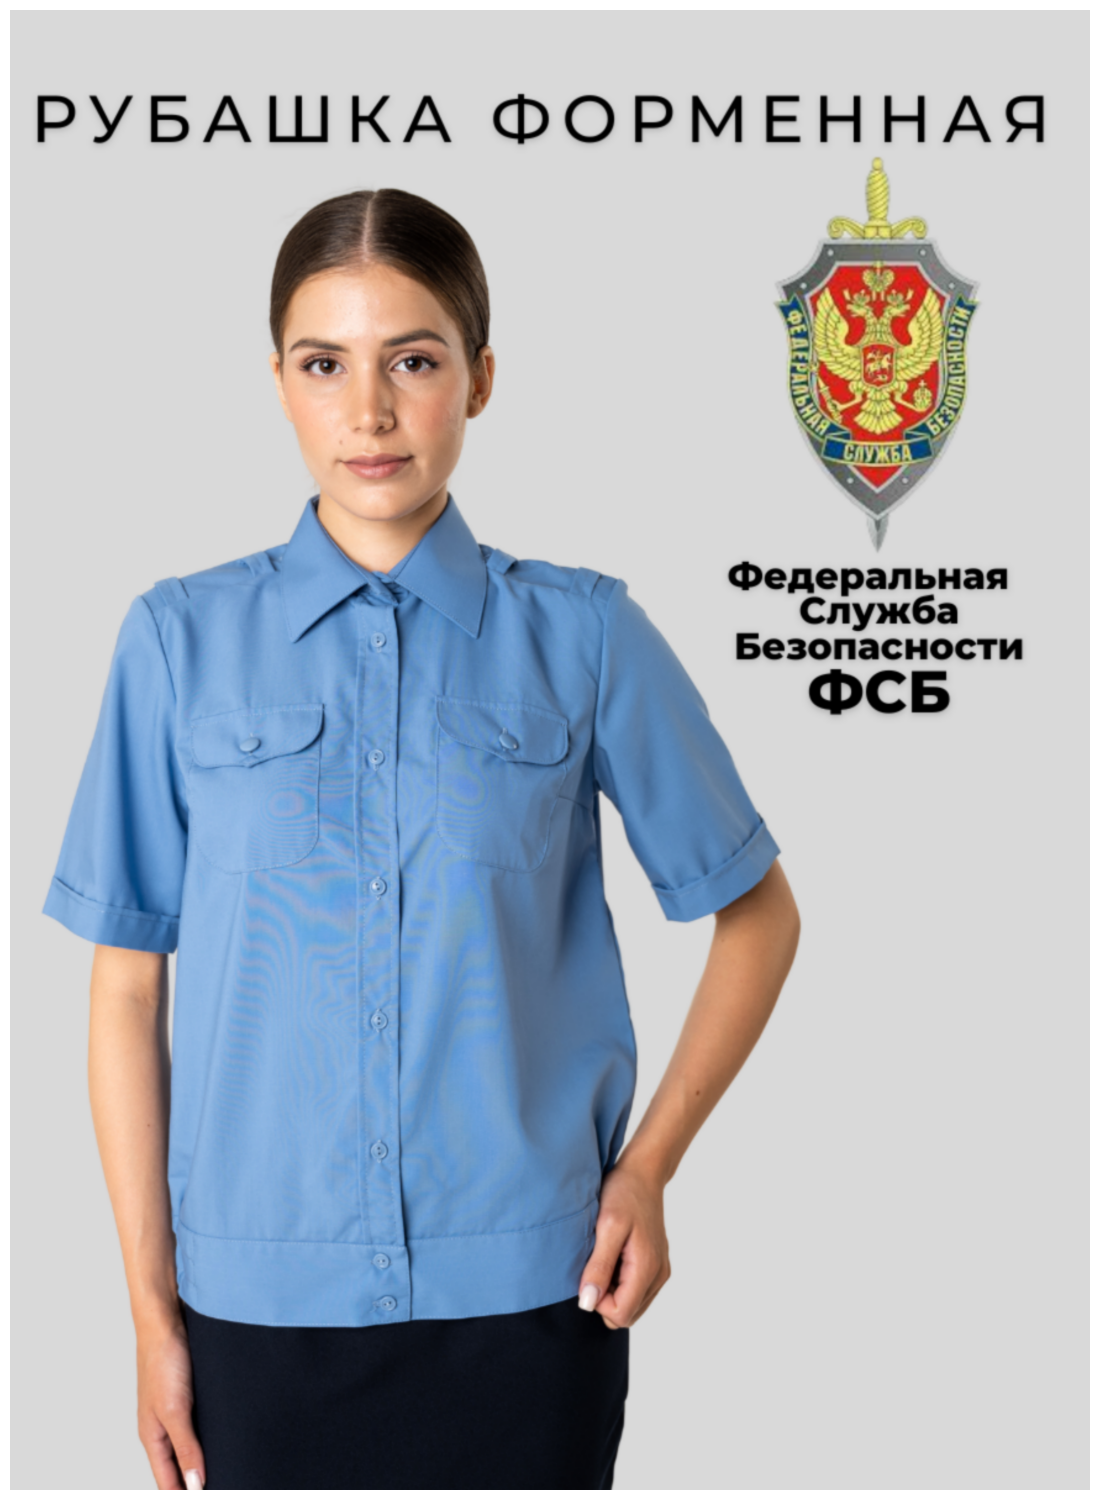 Униформа Рубашка форменная ФСБ с коротким рукавом голубая